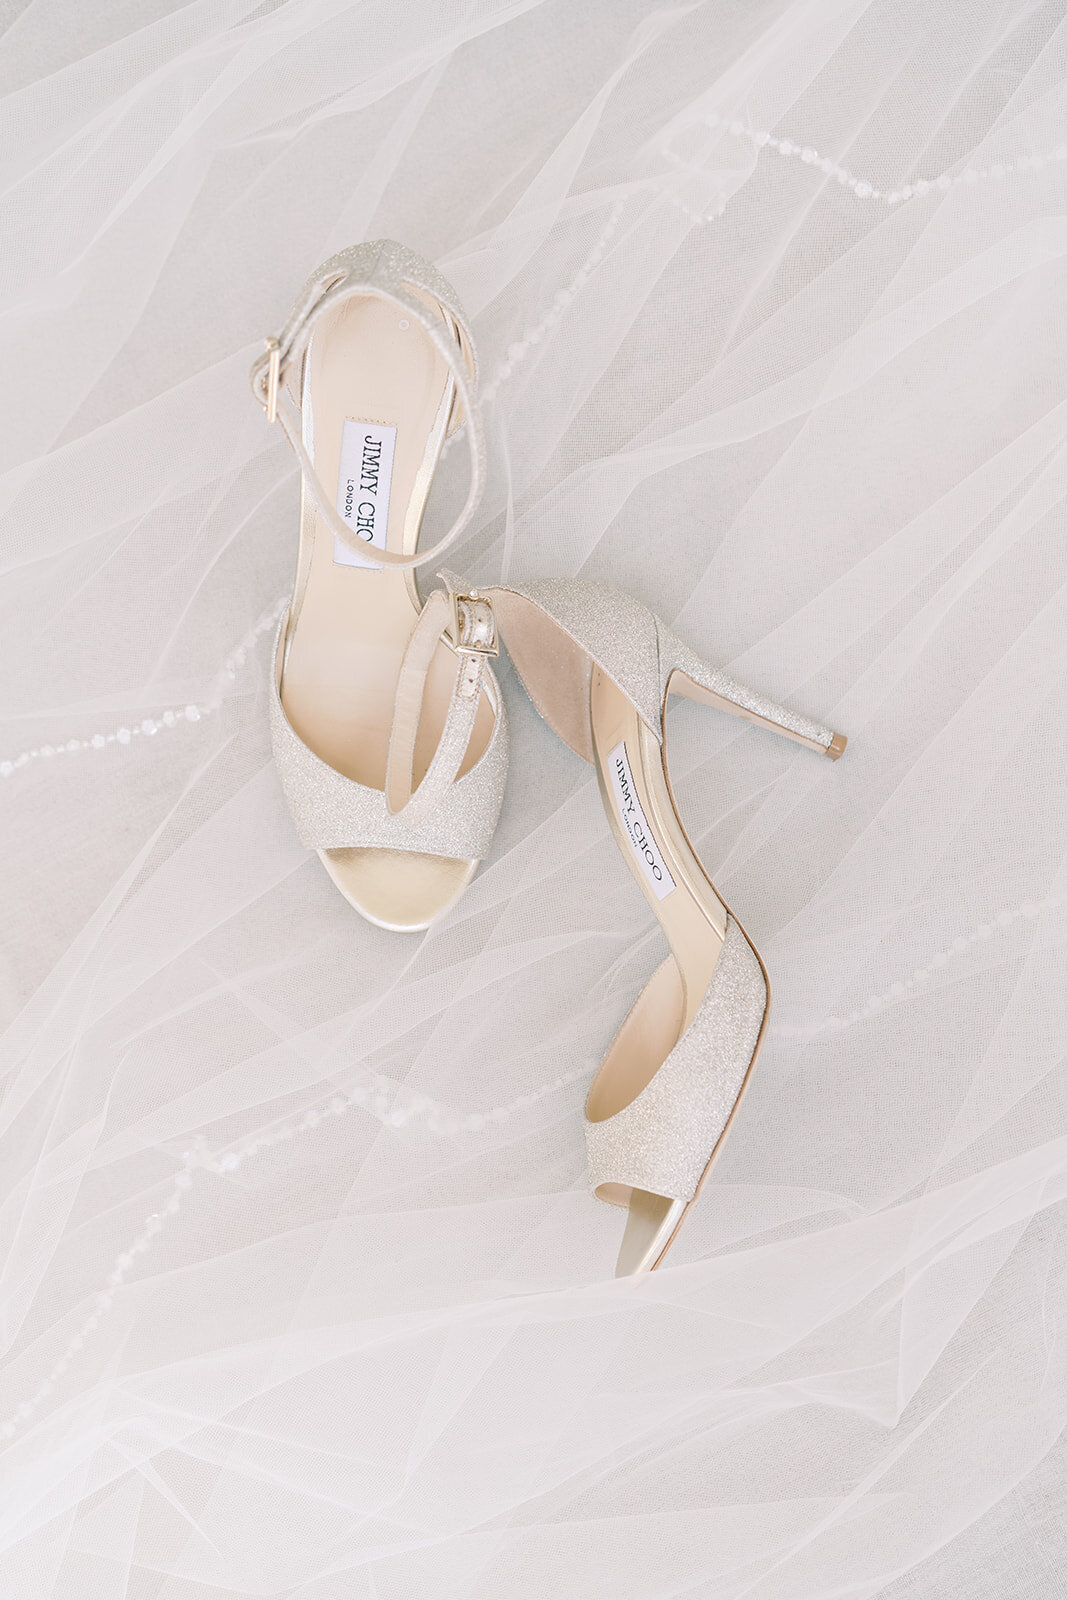 cream bridal shoes